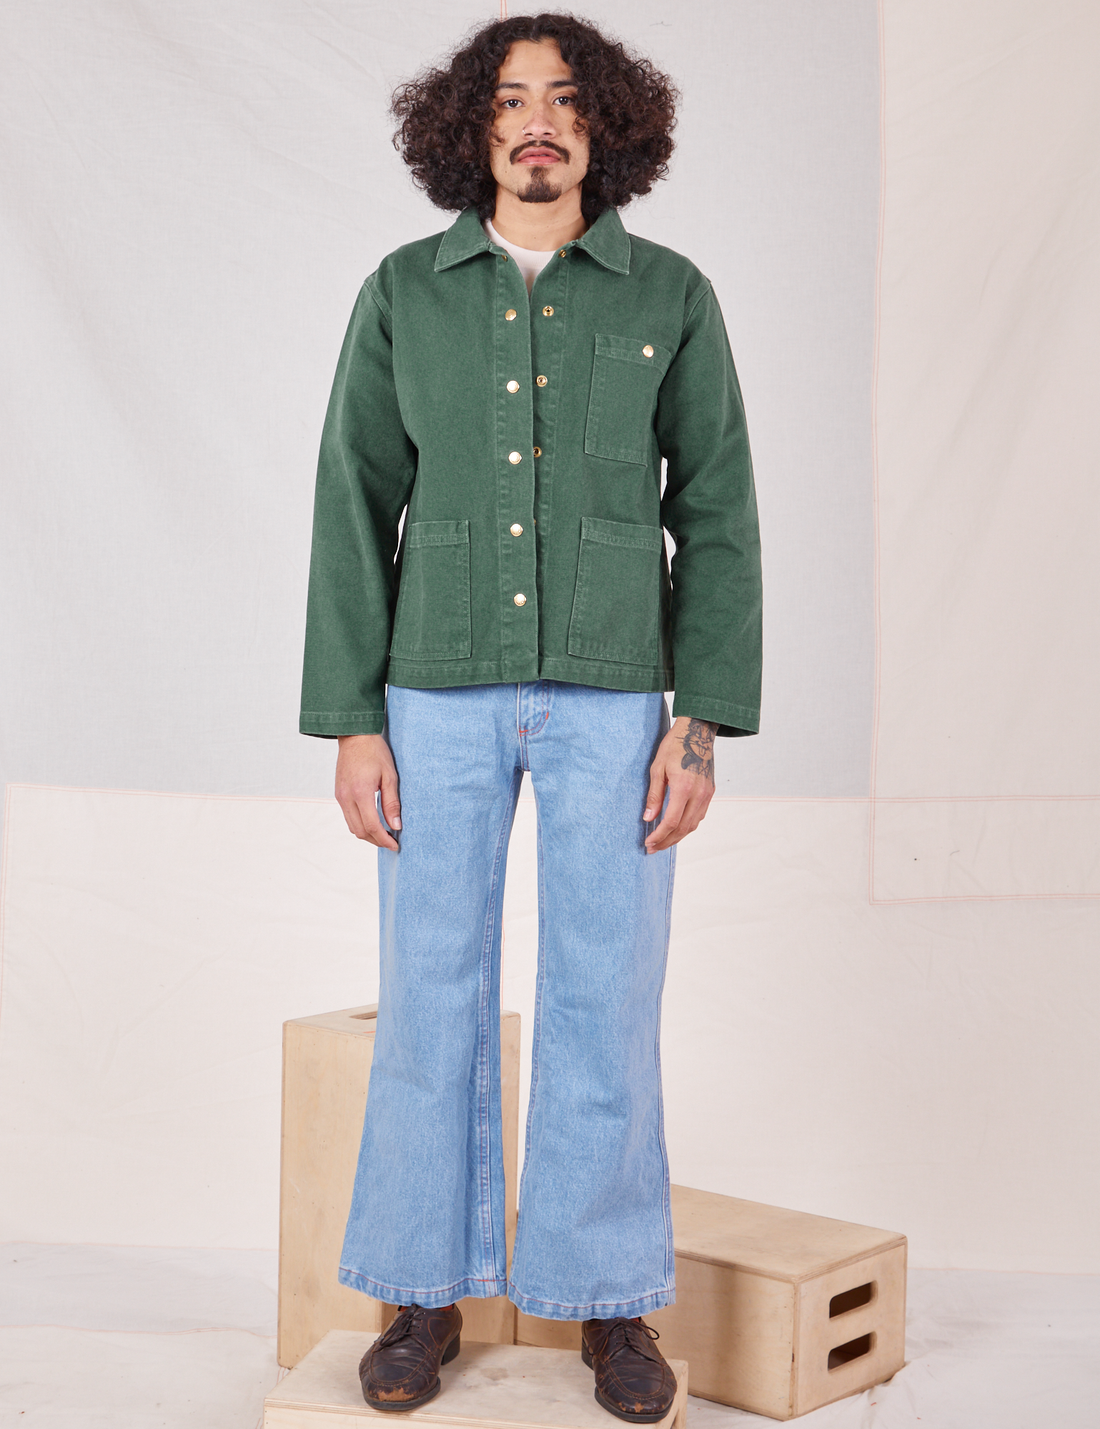 Jesse is wearing Denim Work Jacket in Dark Green Emerald and light wash Sailor jeans